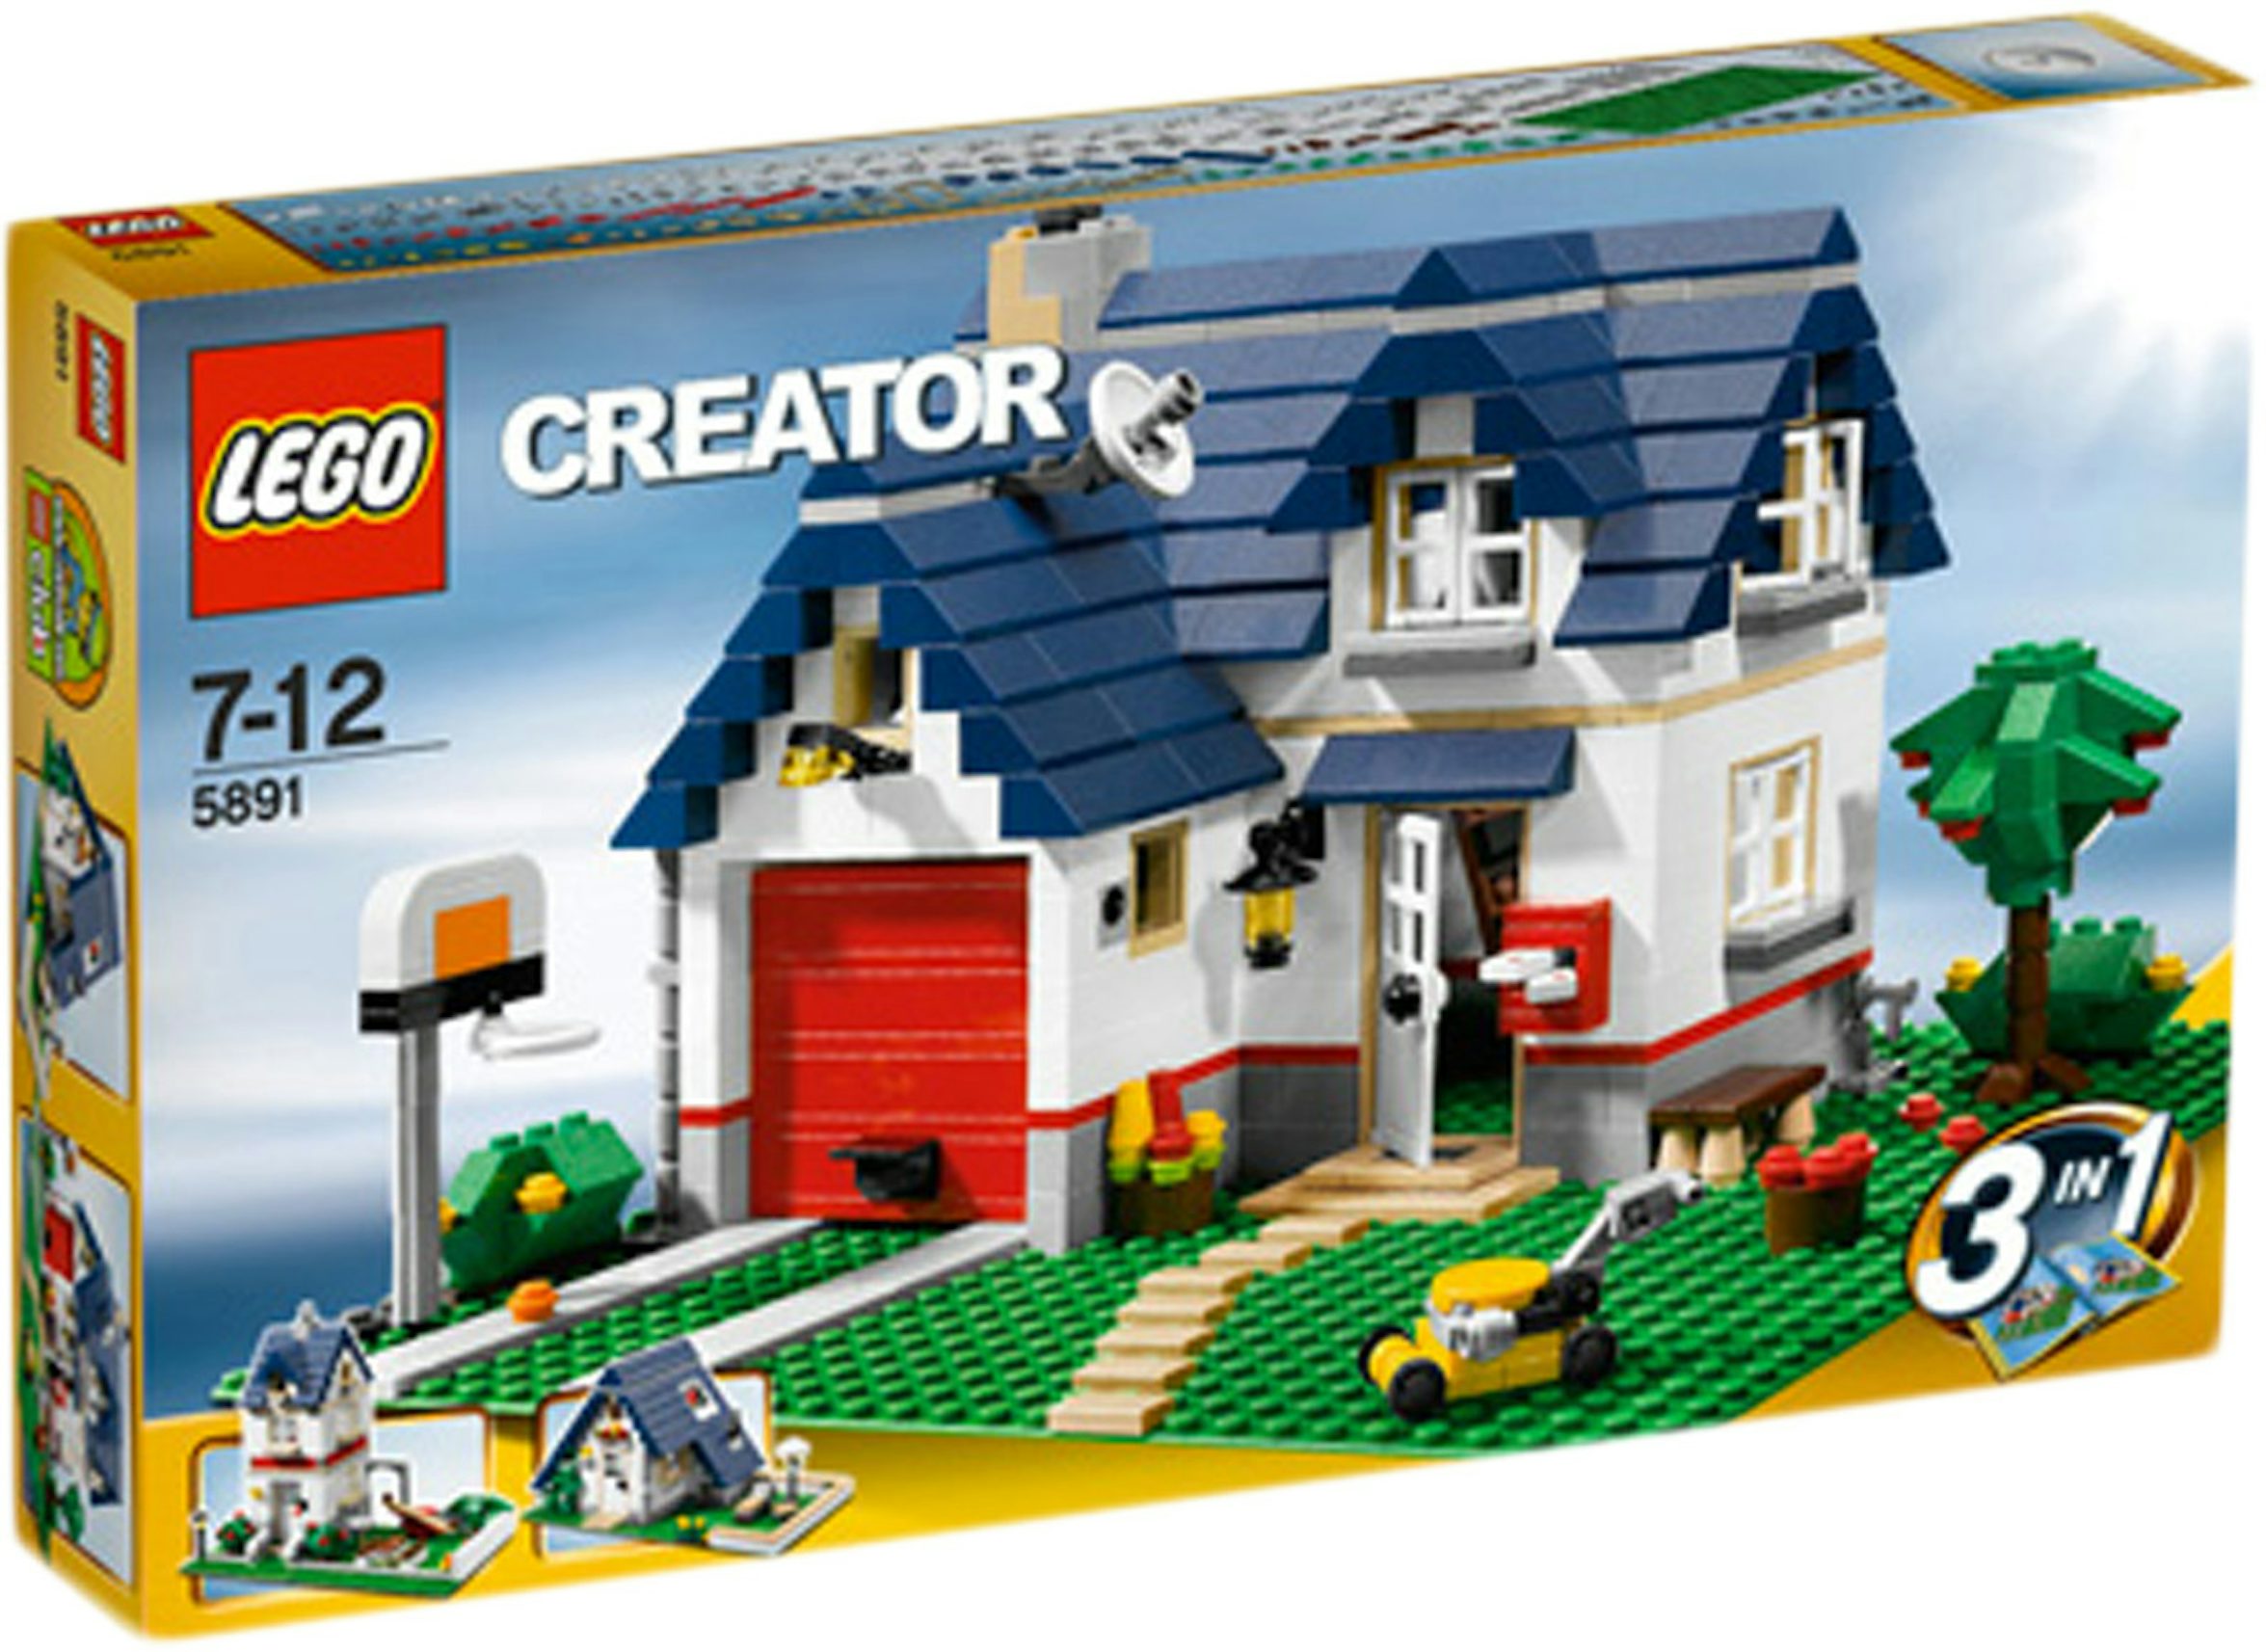 https://images.stockx.com/images/LEGO-Creator-Apple-Tree-House-Set-5891.jpg?fit=fill&bg=FFFFFF&w=1200&h=857&fm=jpg&auto=compress&dpr=2&trim=color&updated_at=1643043532&q=60